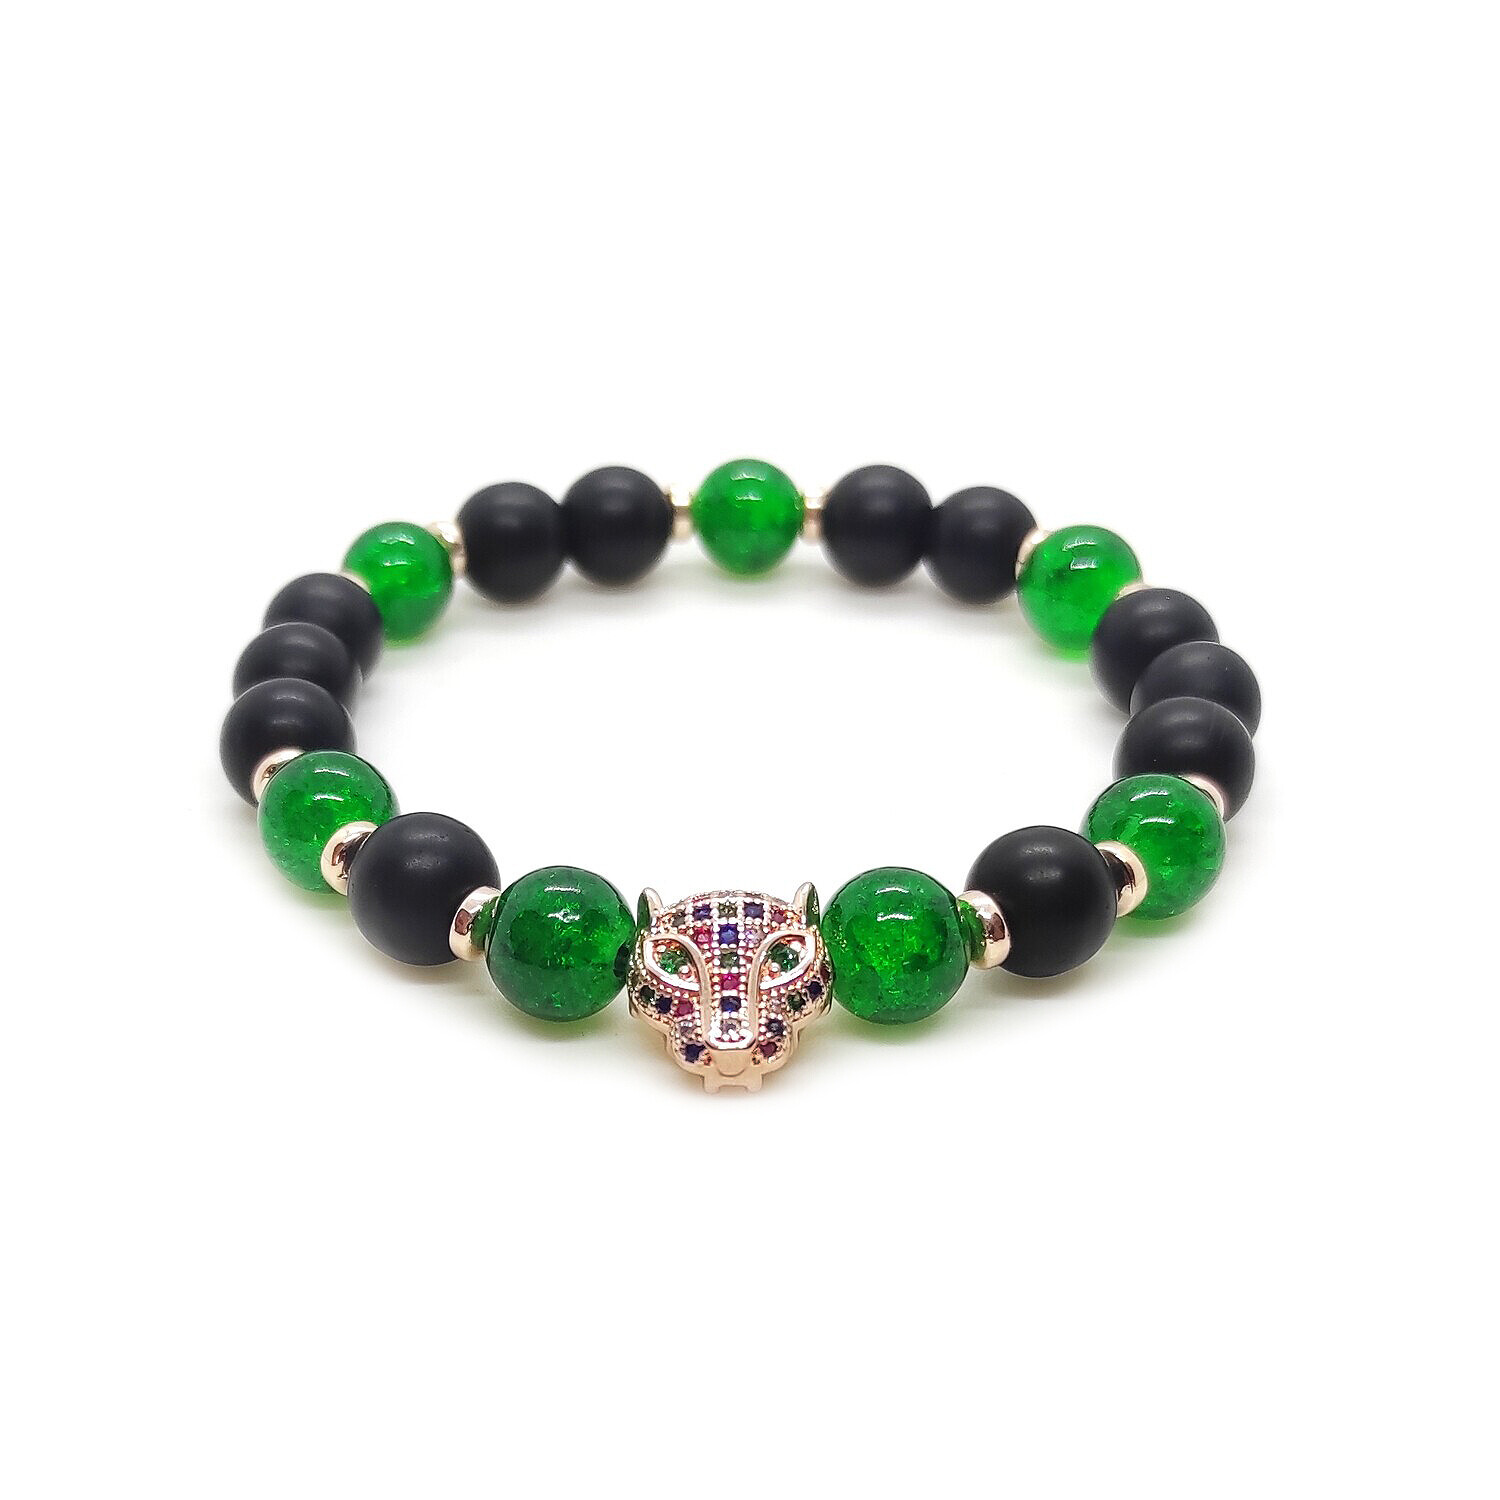 Black Onyx bracelet with zirconia Cheetah charm